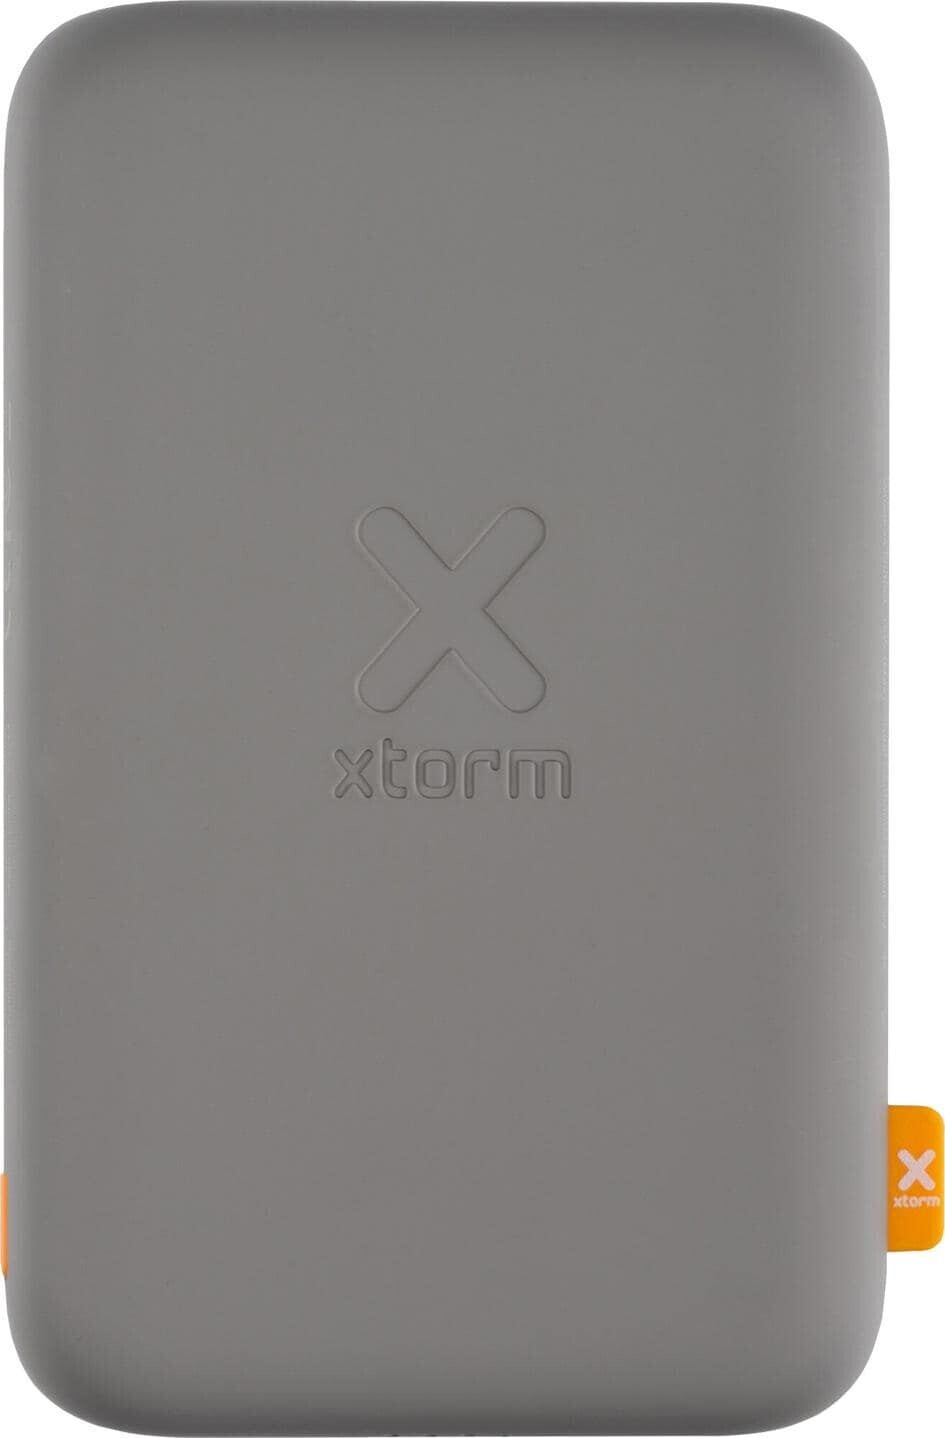 Xtorm Magnetic Wireless Power Bank Batería Externa Magnética e